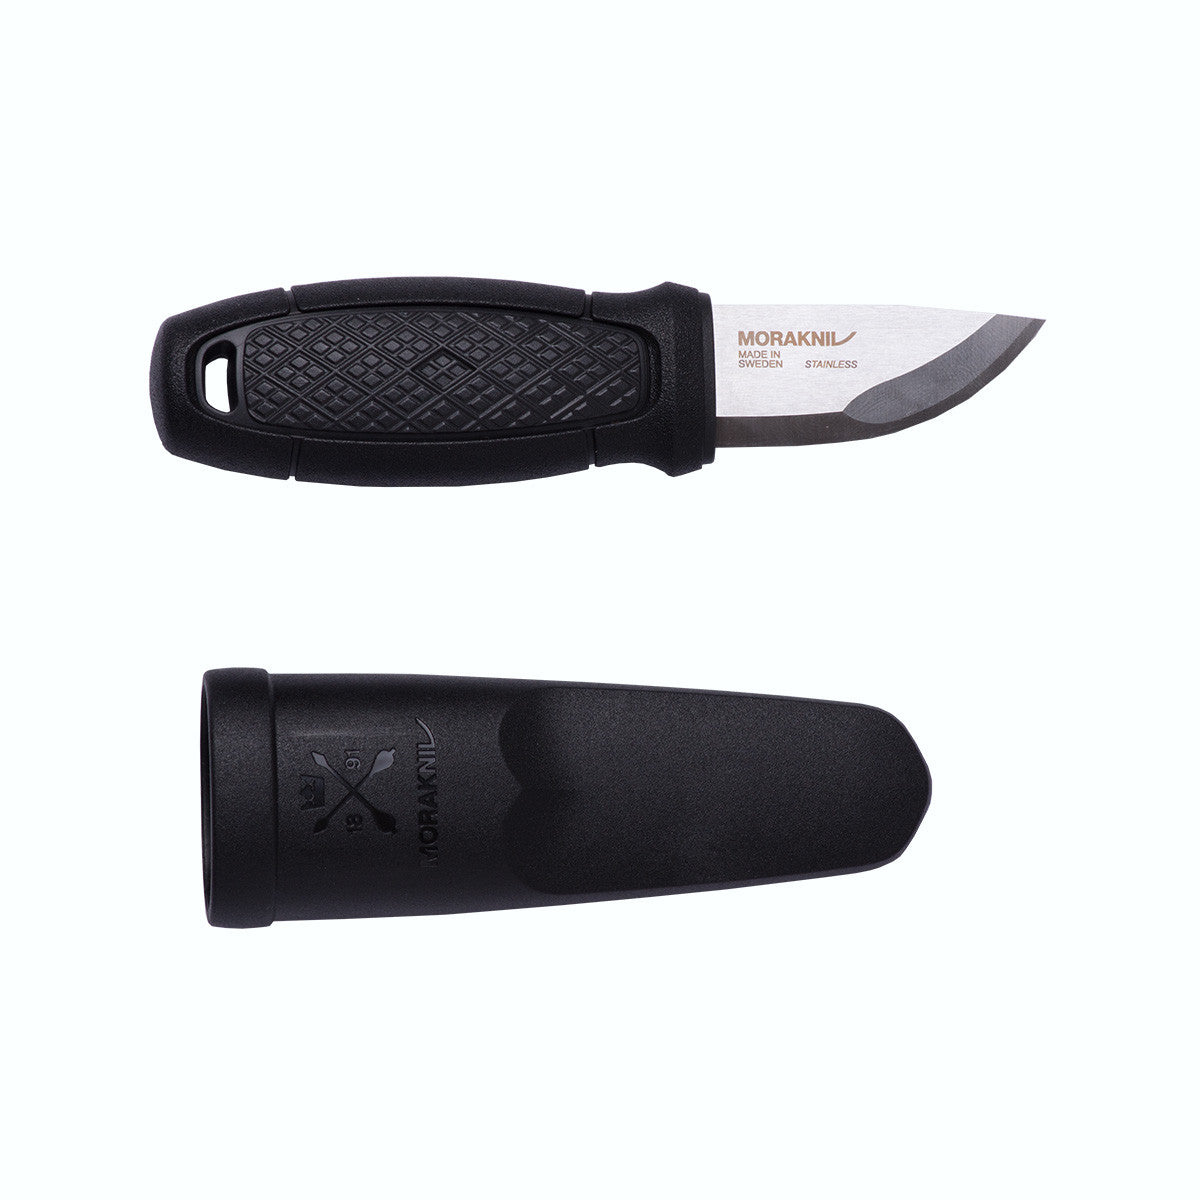 Morakniv Morakniv Eldris Black Outdoor Knife with Clam Sheath - BNR Industrial